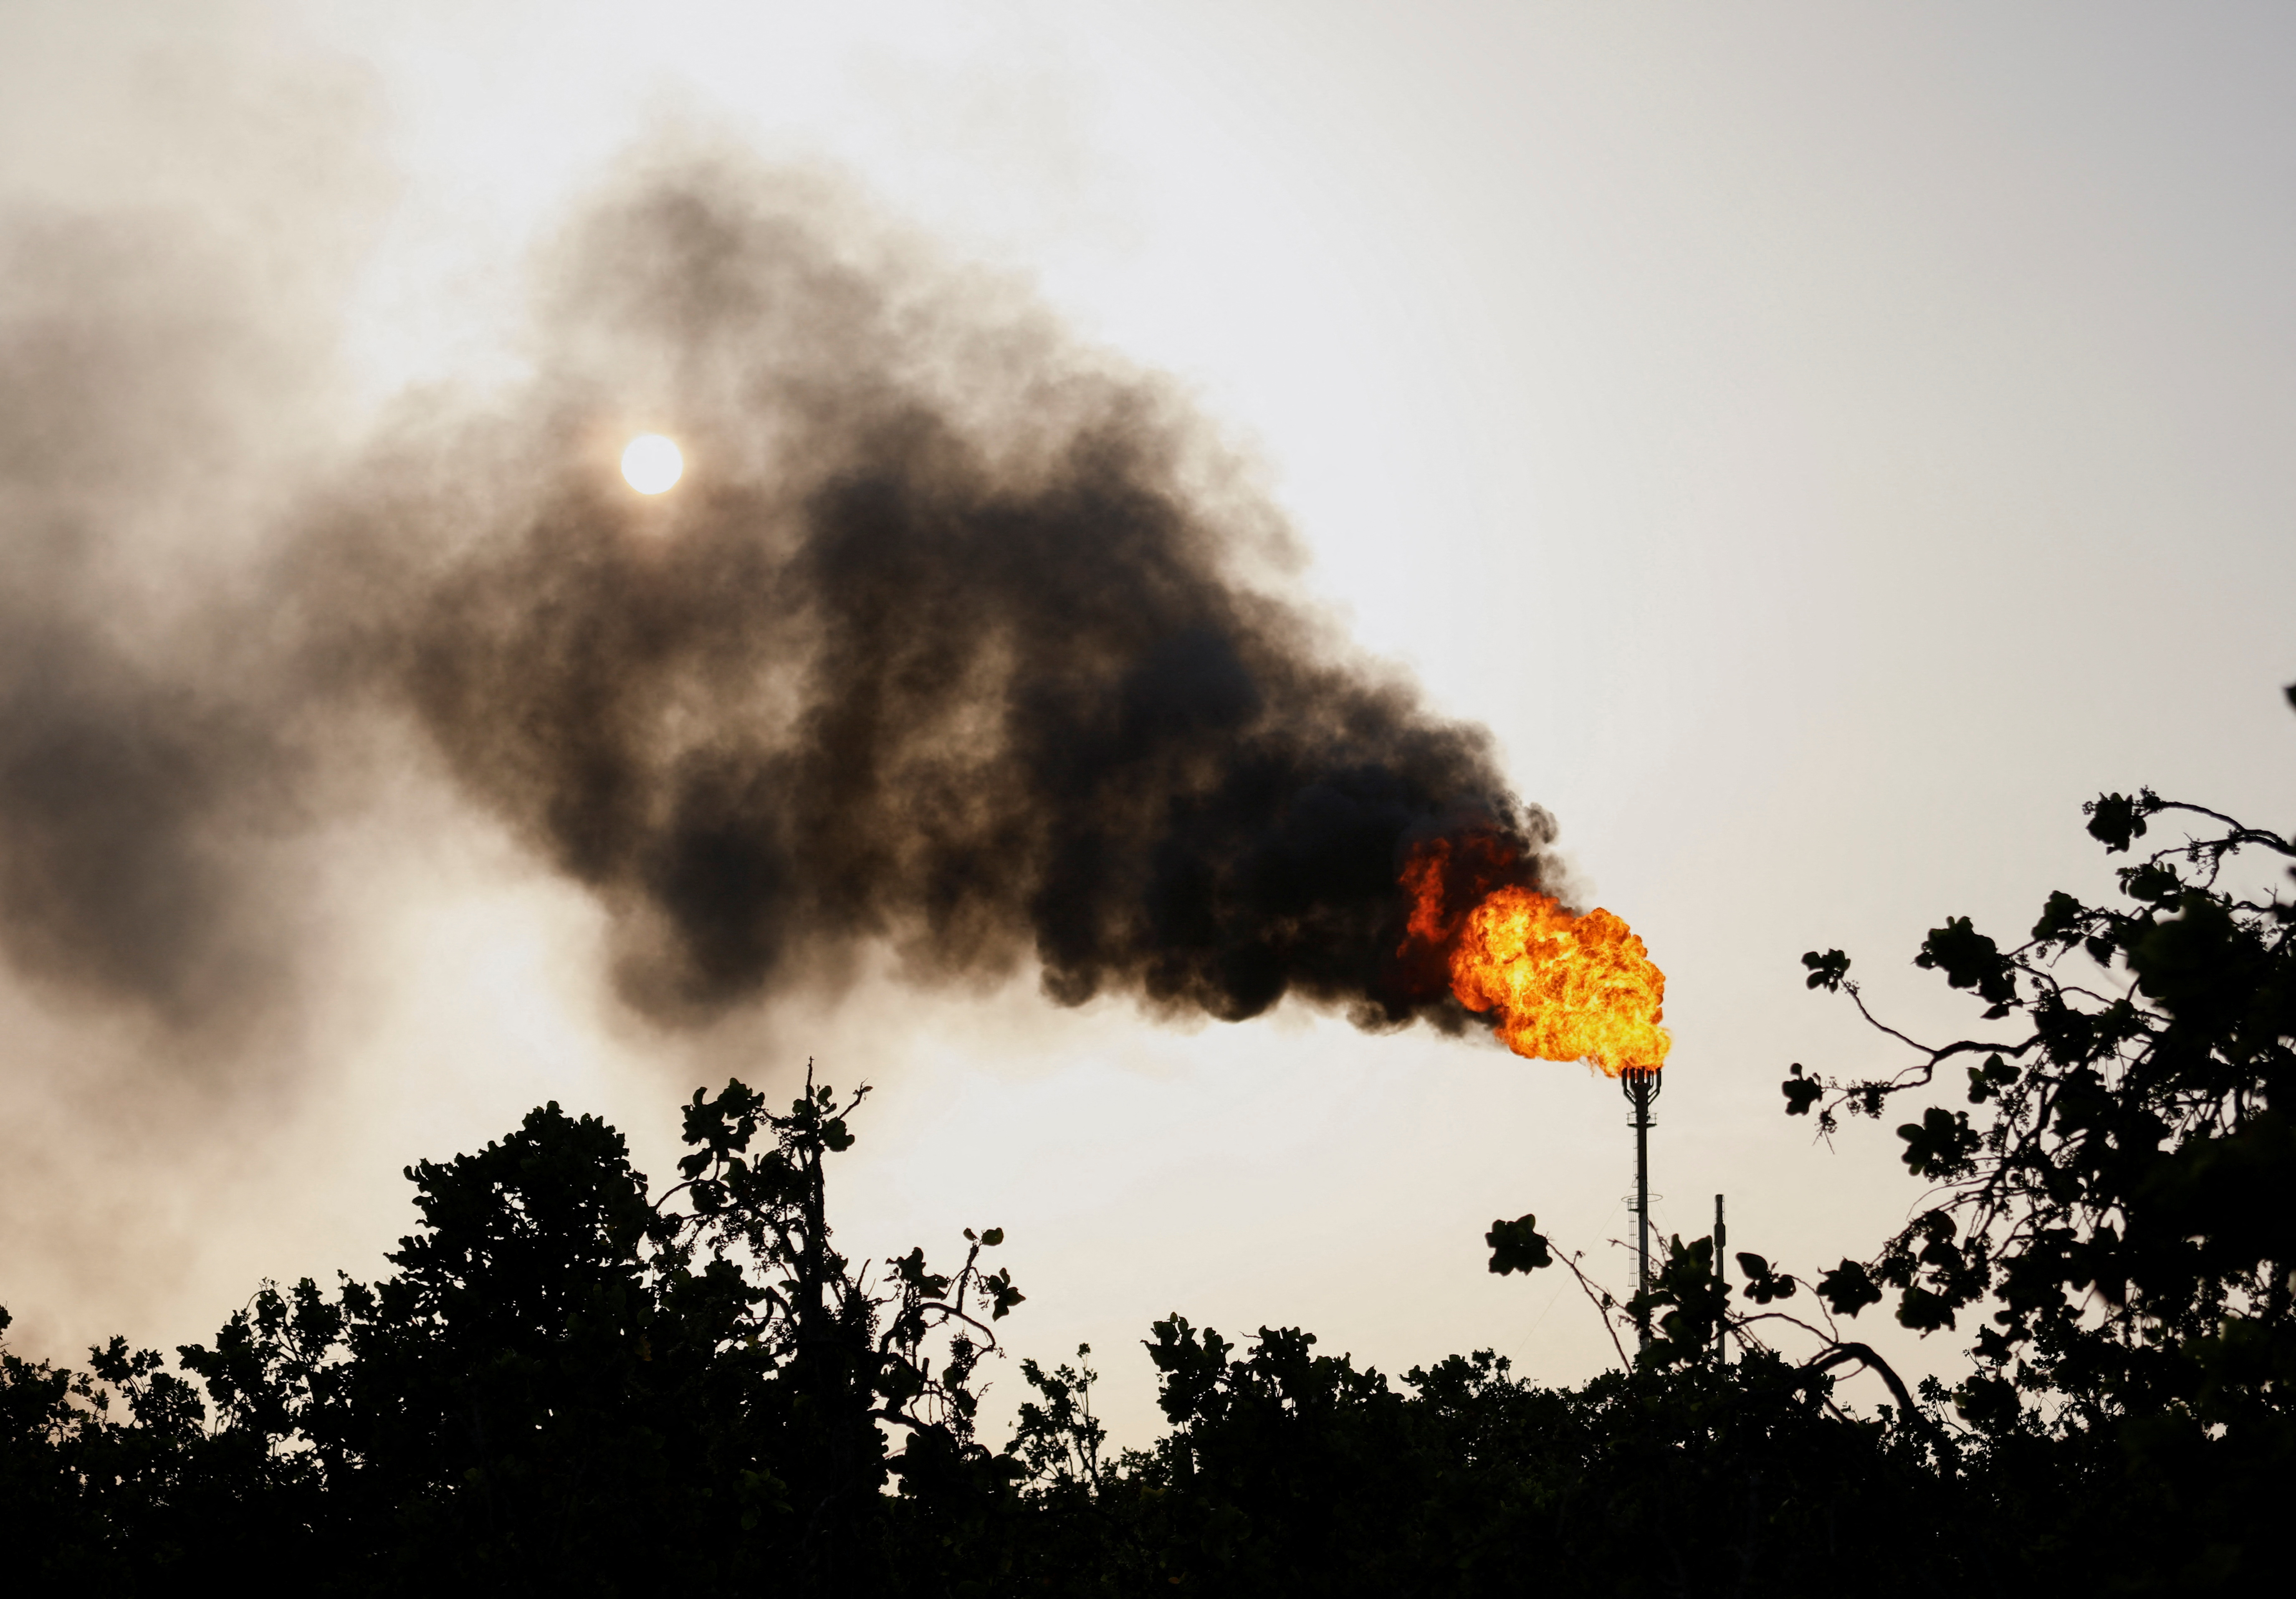 Venezuela fails to curb oil leaks, gas flaring despite pledges